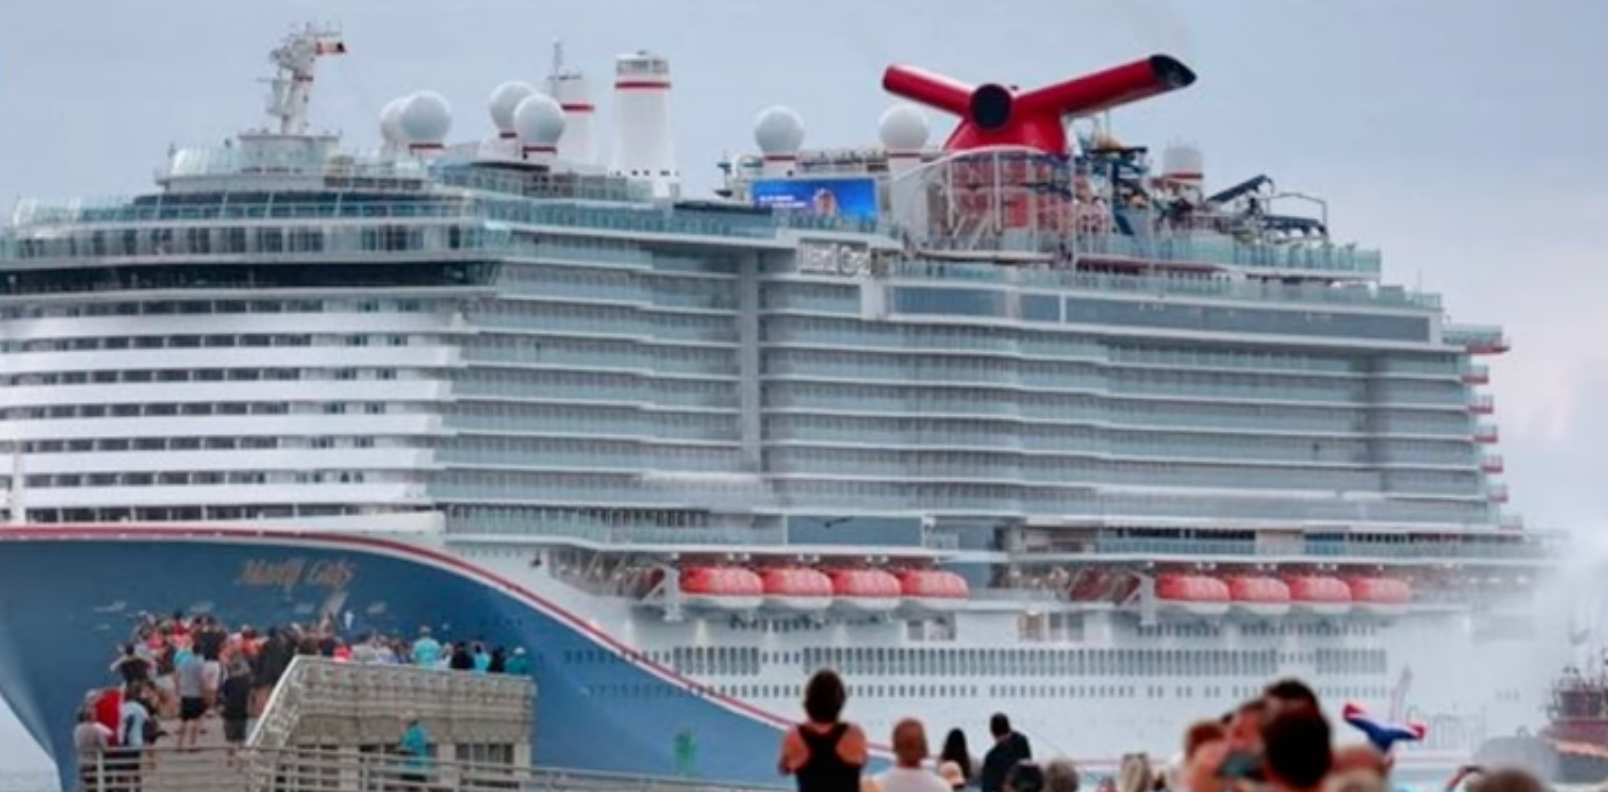 The Carnival cruise ship Mardi Gras in 2021.